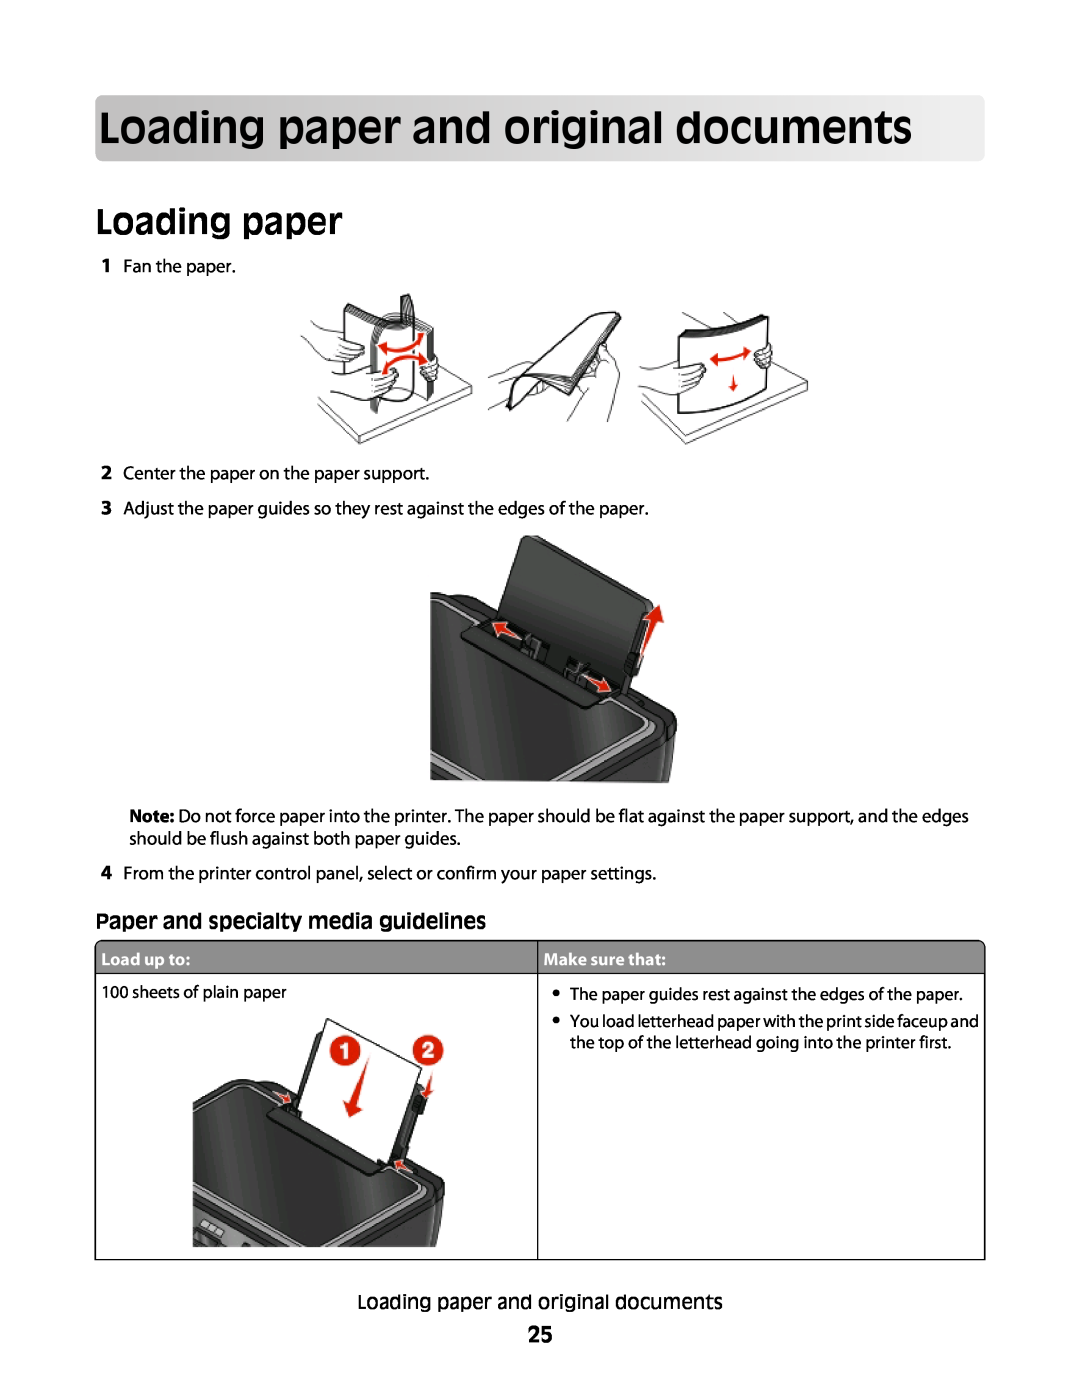 Lexmark 10E, 101 manual Loading paperandoriginaldocuments, Paper and specialty media guidelines 